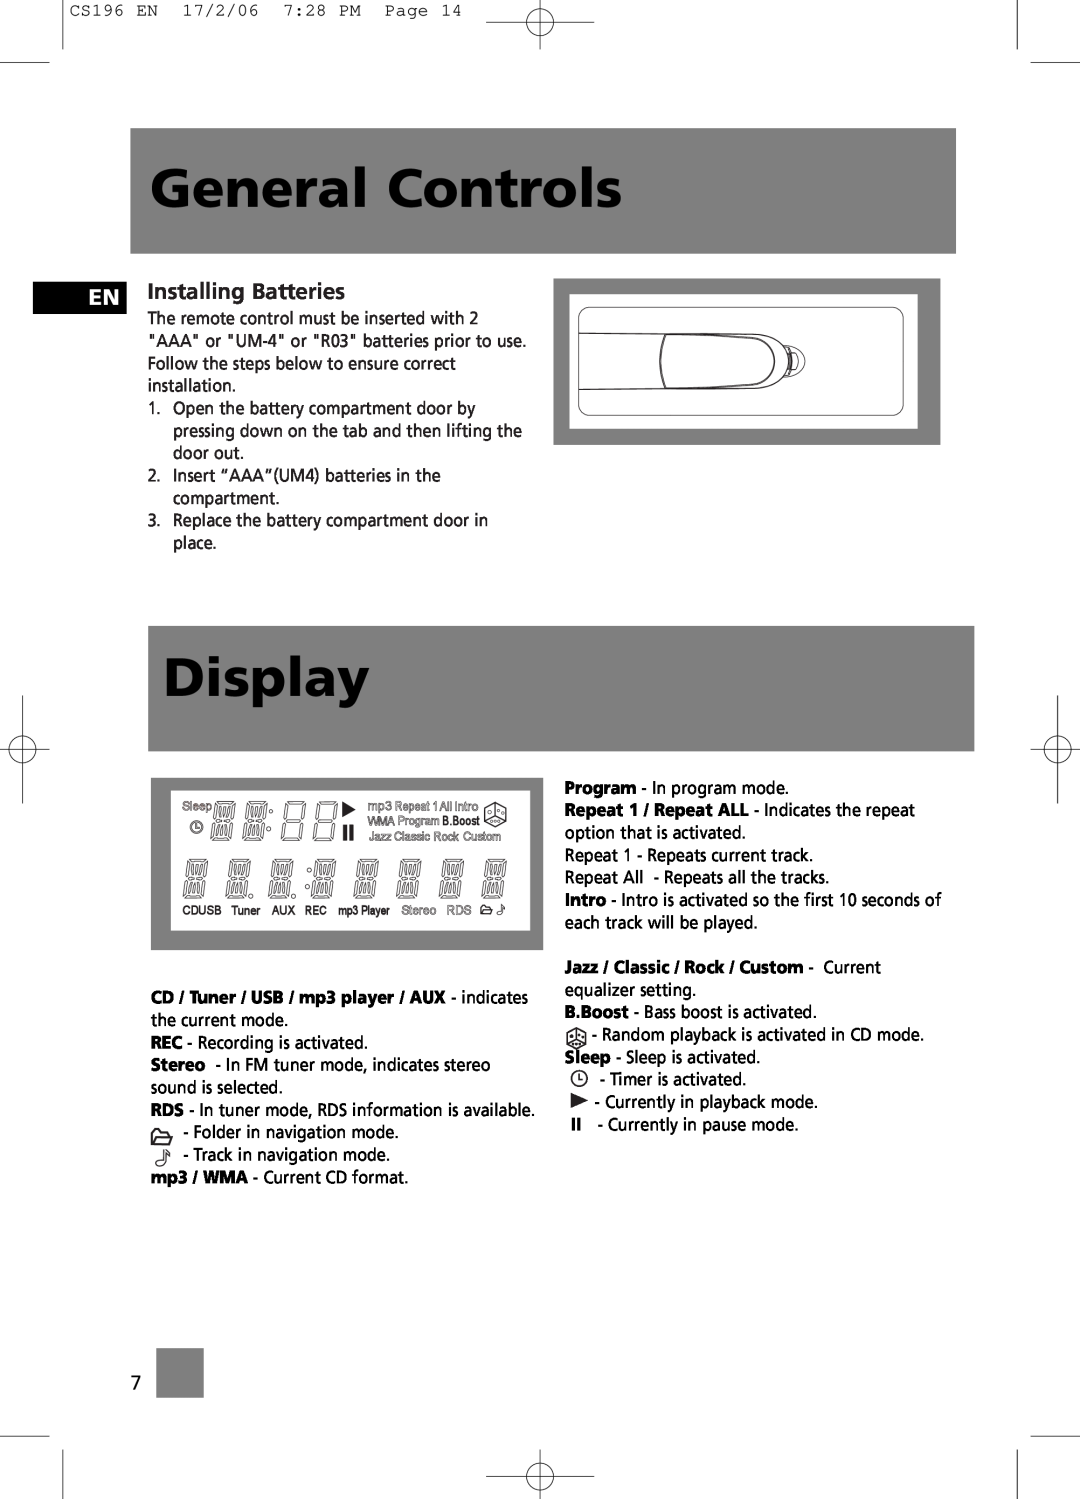 Technicolor - Thomson CS196 user manual Display, EN Installing Batteries, General Controls 